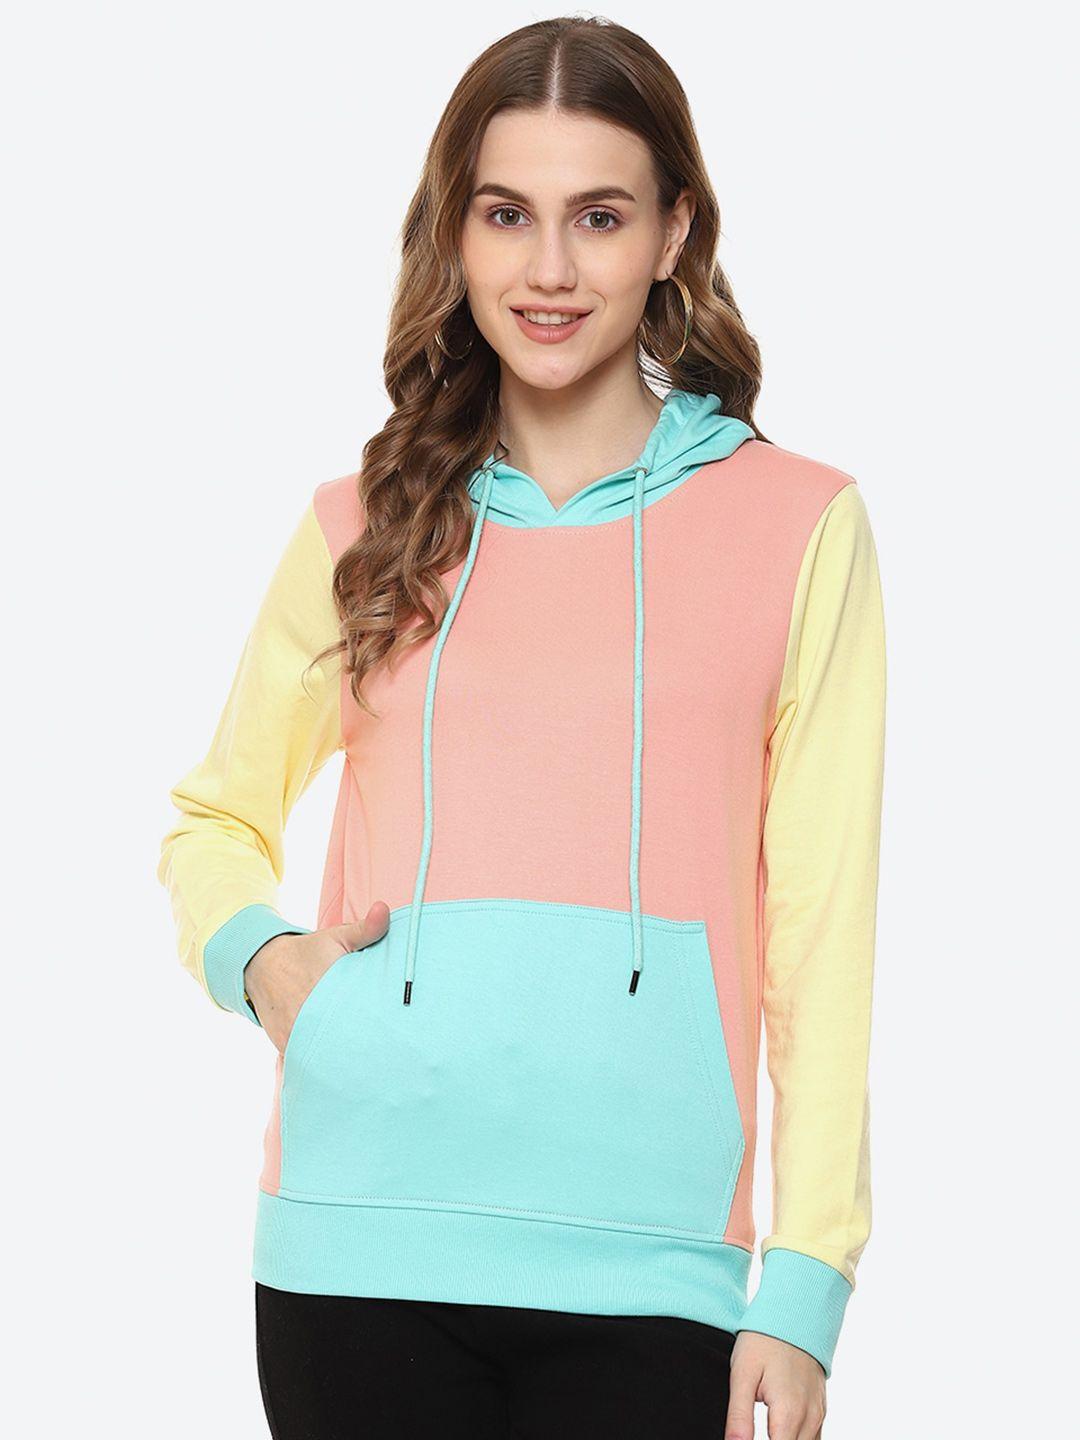 2bme colourblocked cotton hooded pullover sweatshirt